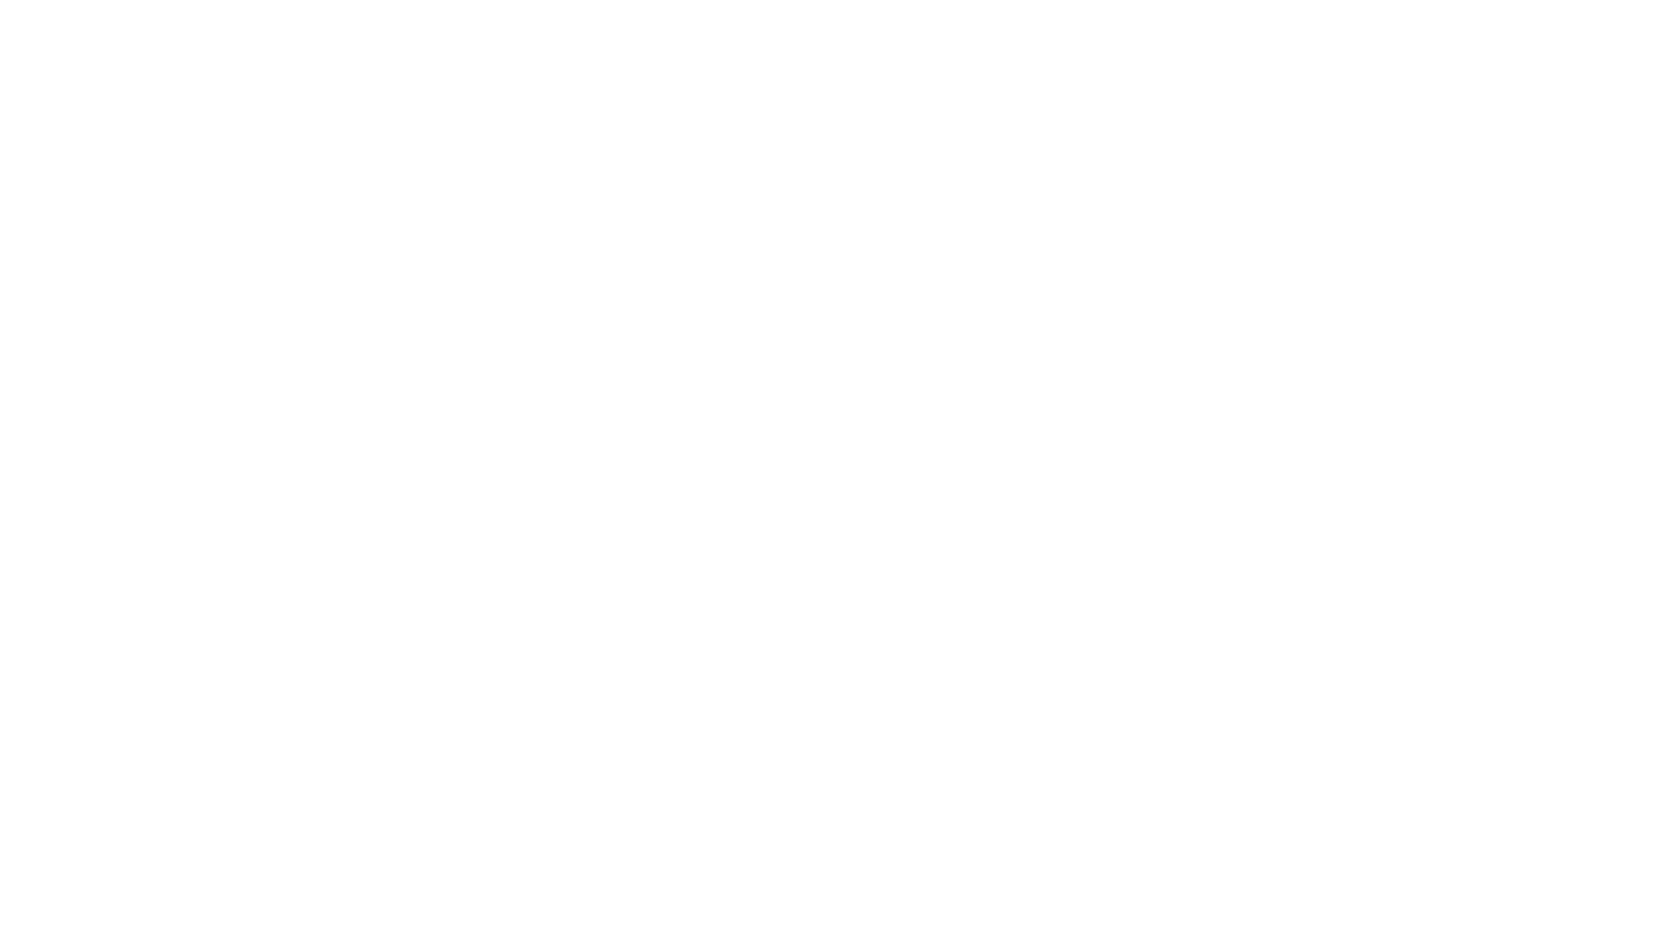 German Danish Innovation